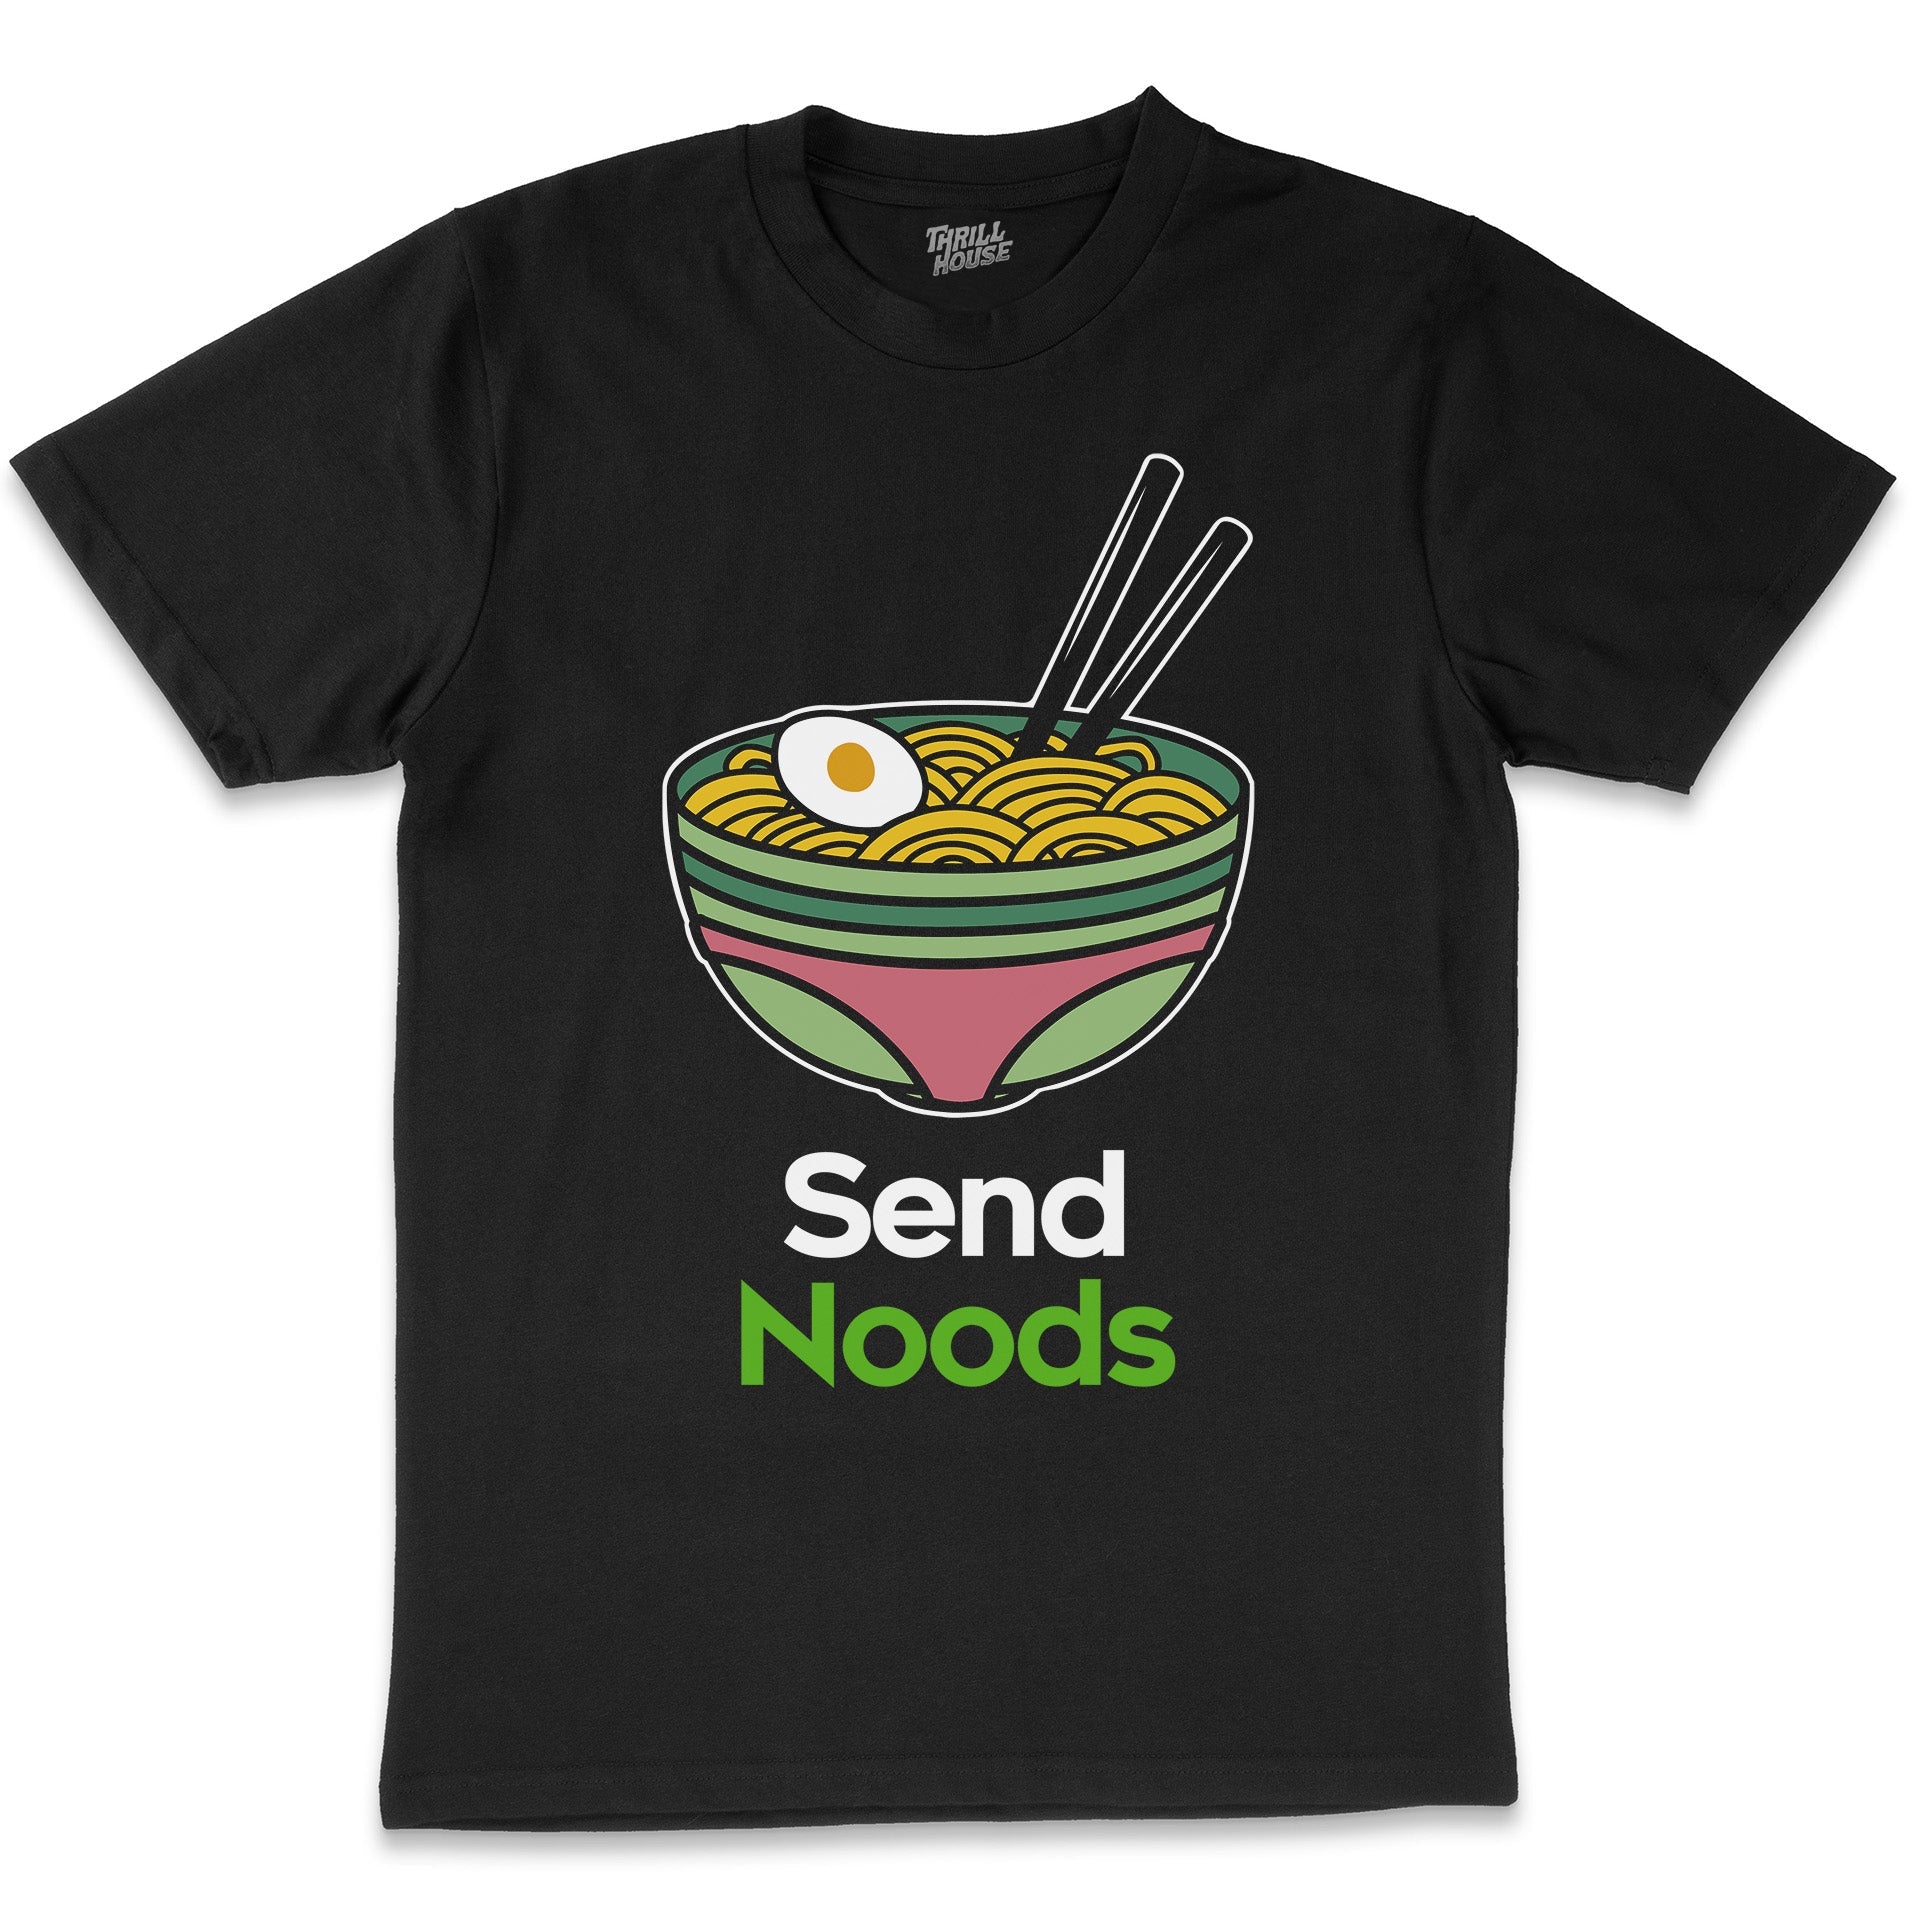 Send Noods Funny Ramen Noodles Pun Japanese Japan Influenced Cotton T-Shirt